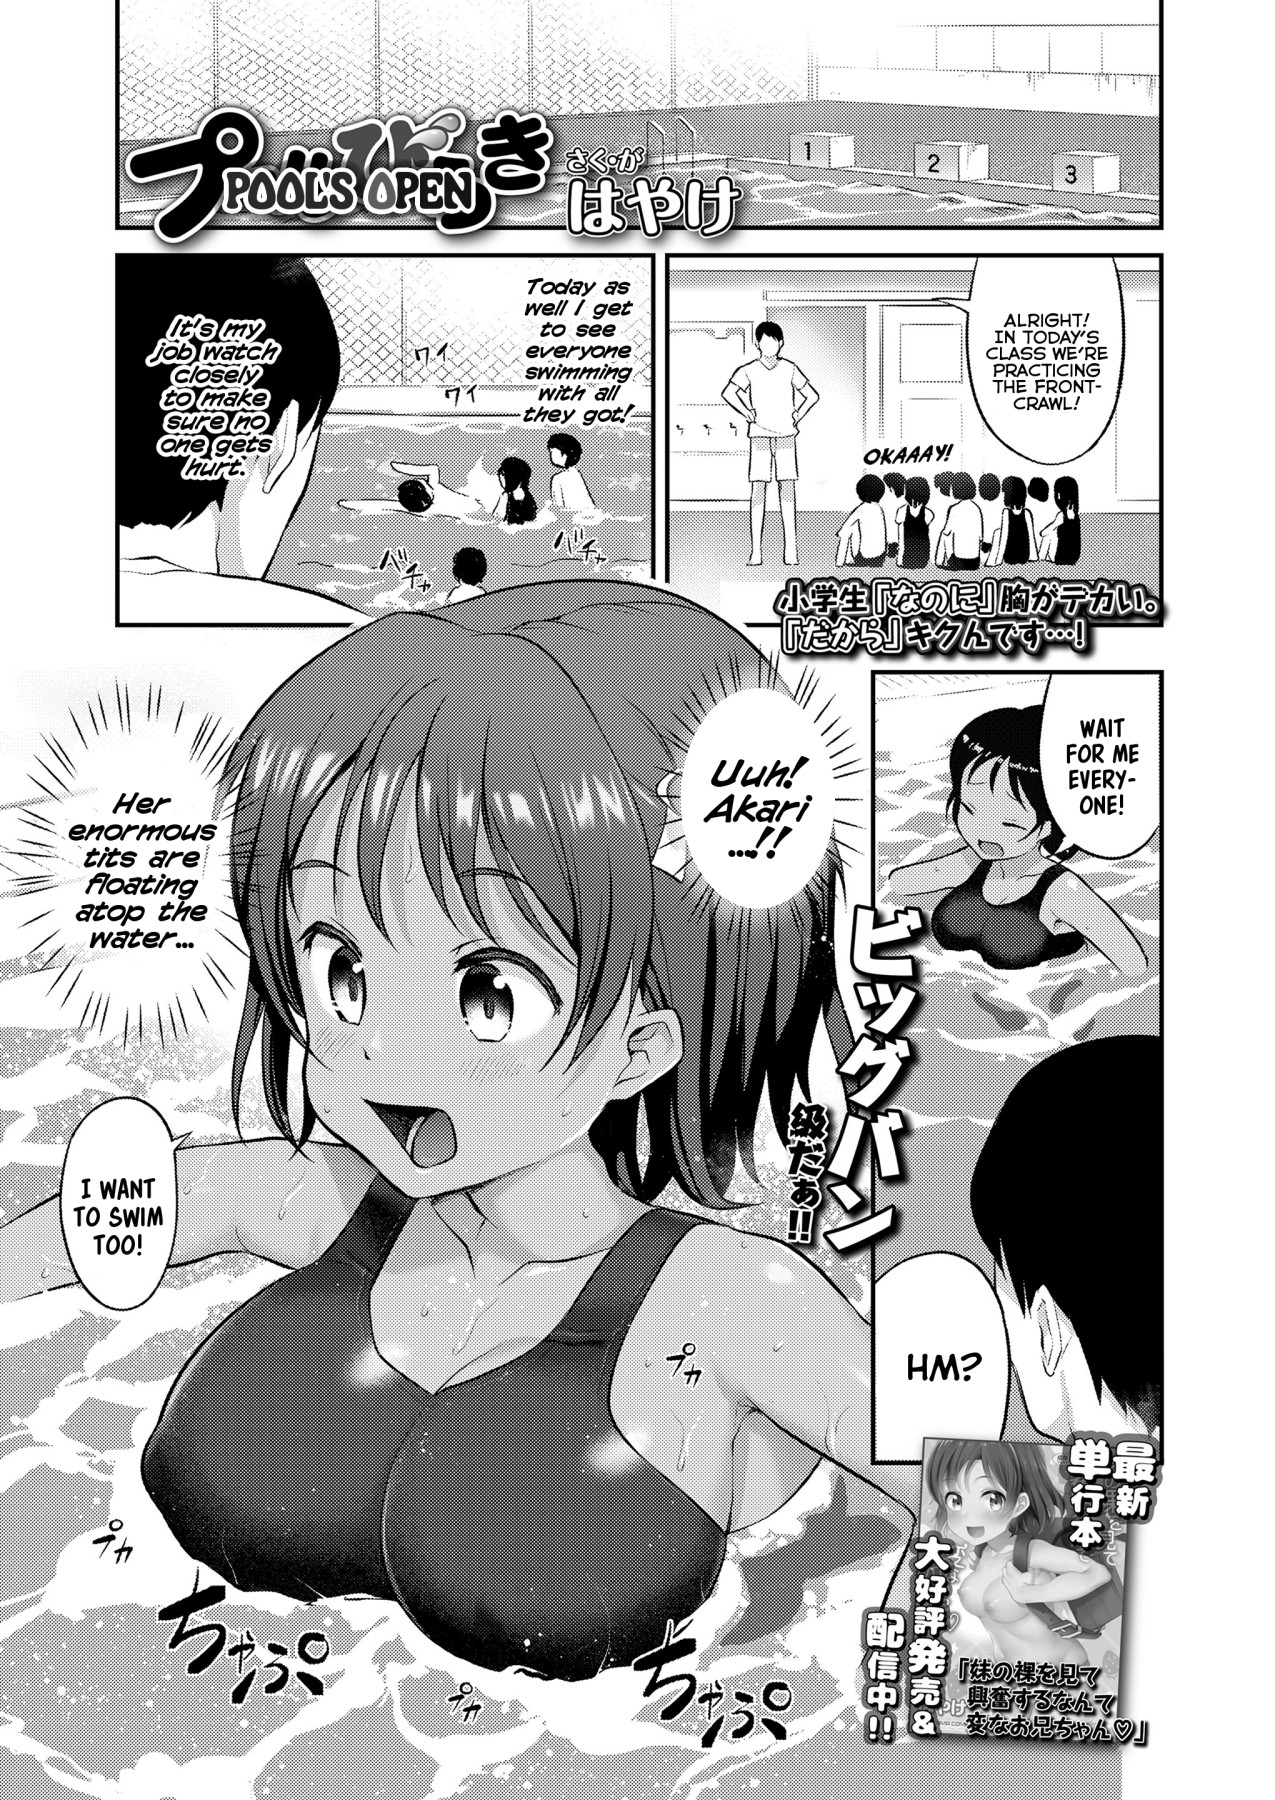 Hentai Manga Comic-Pool's Open-Read-1